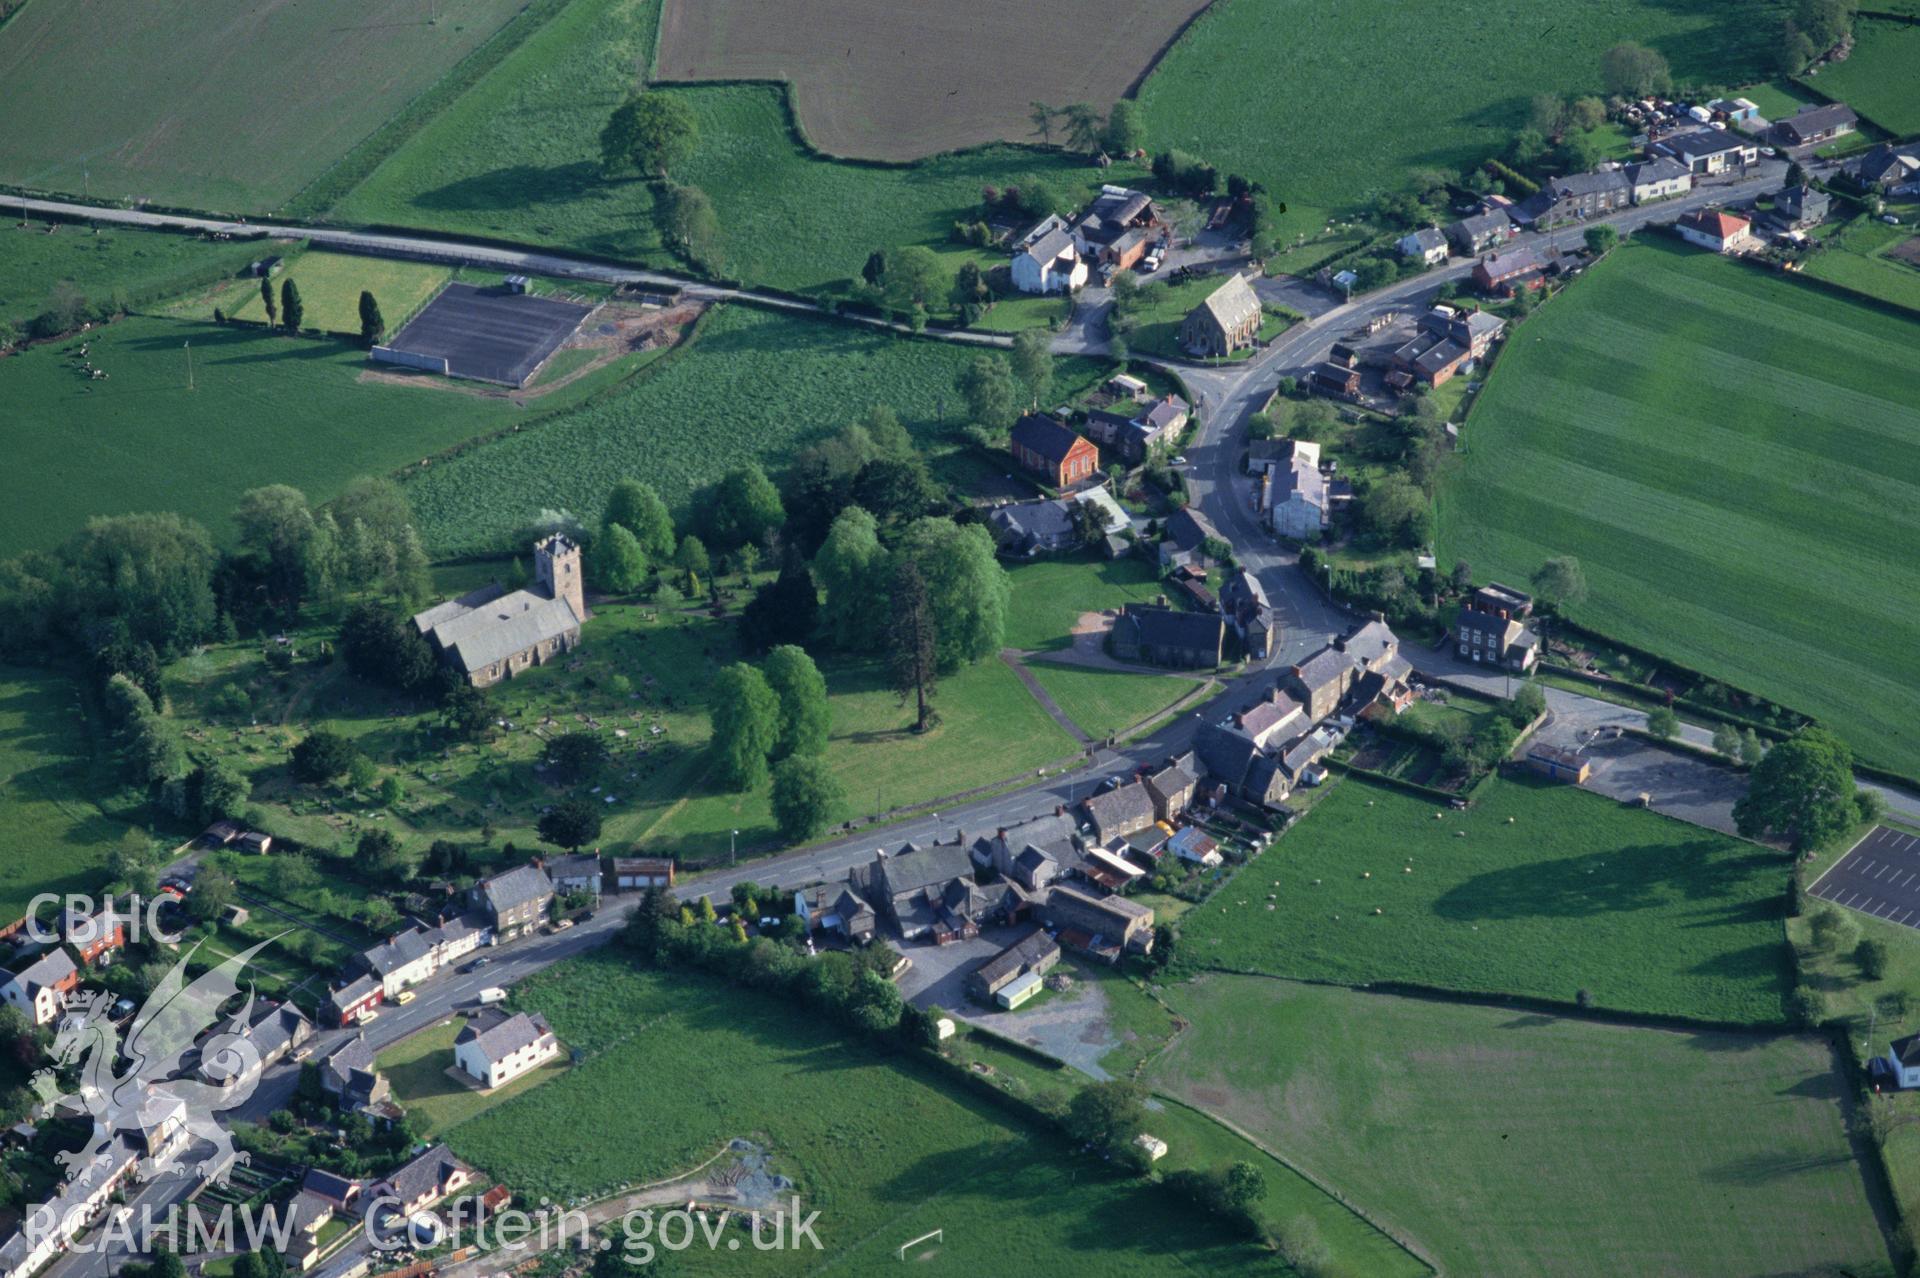 Slide of RCAHMW colour oblique aerial photograph of Meifod, taken by C.R. Musson, 15/4/1993.